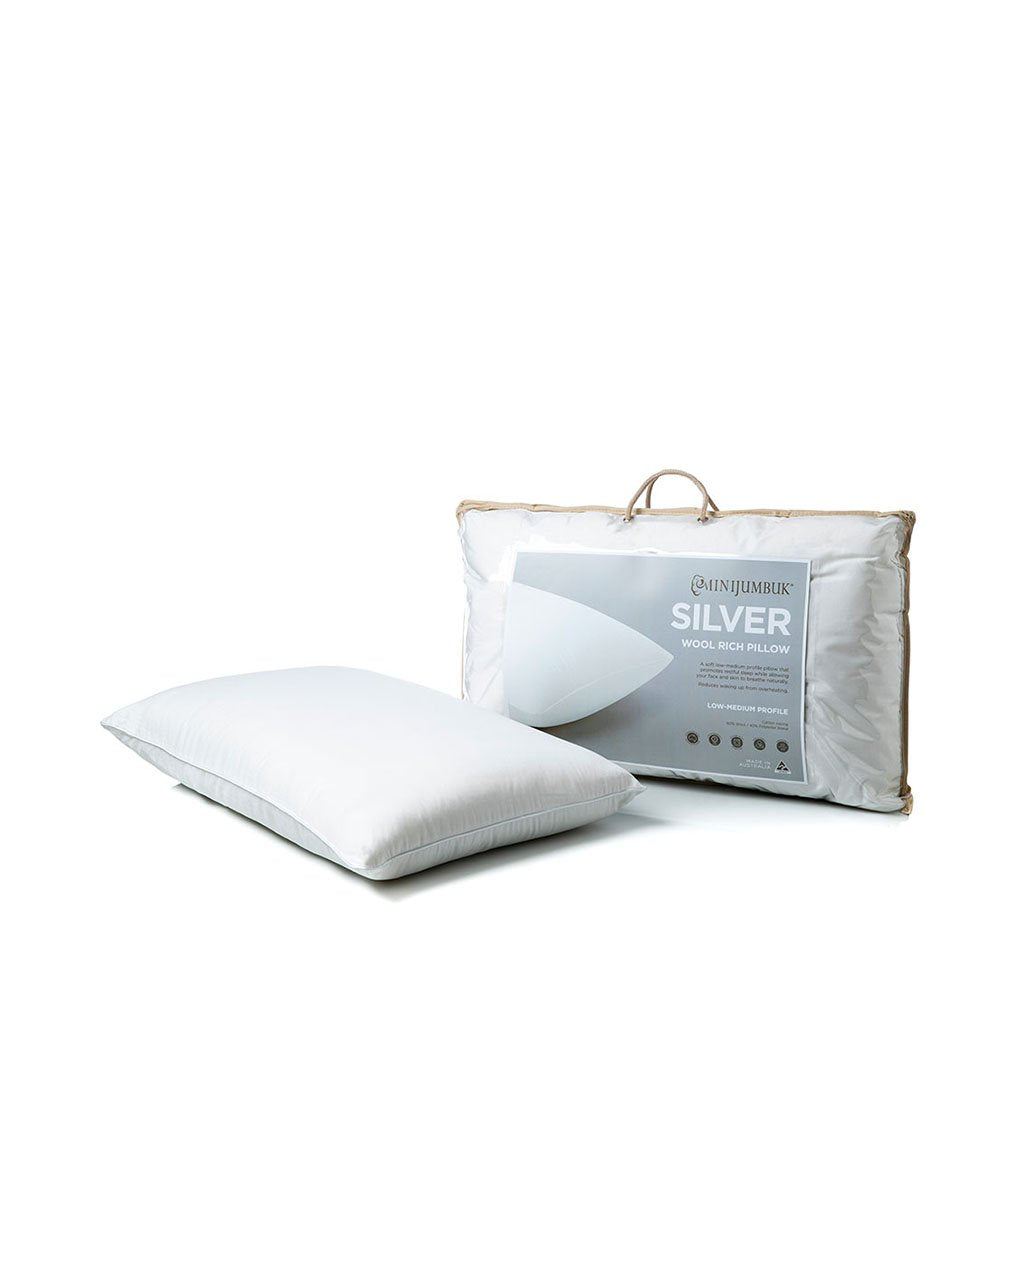 MiniJumbuk Silver Pillow - Product and Pack